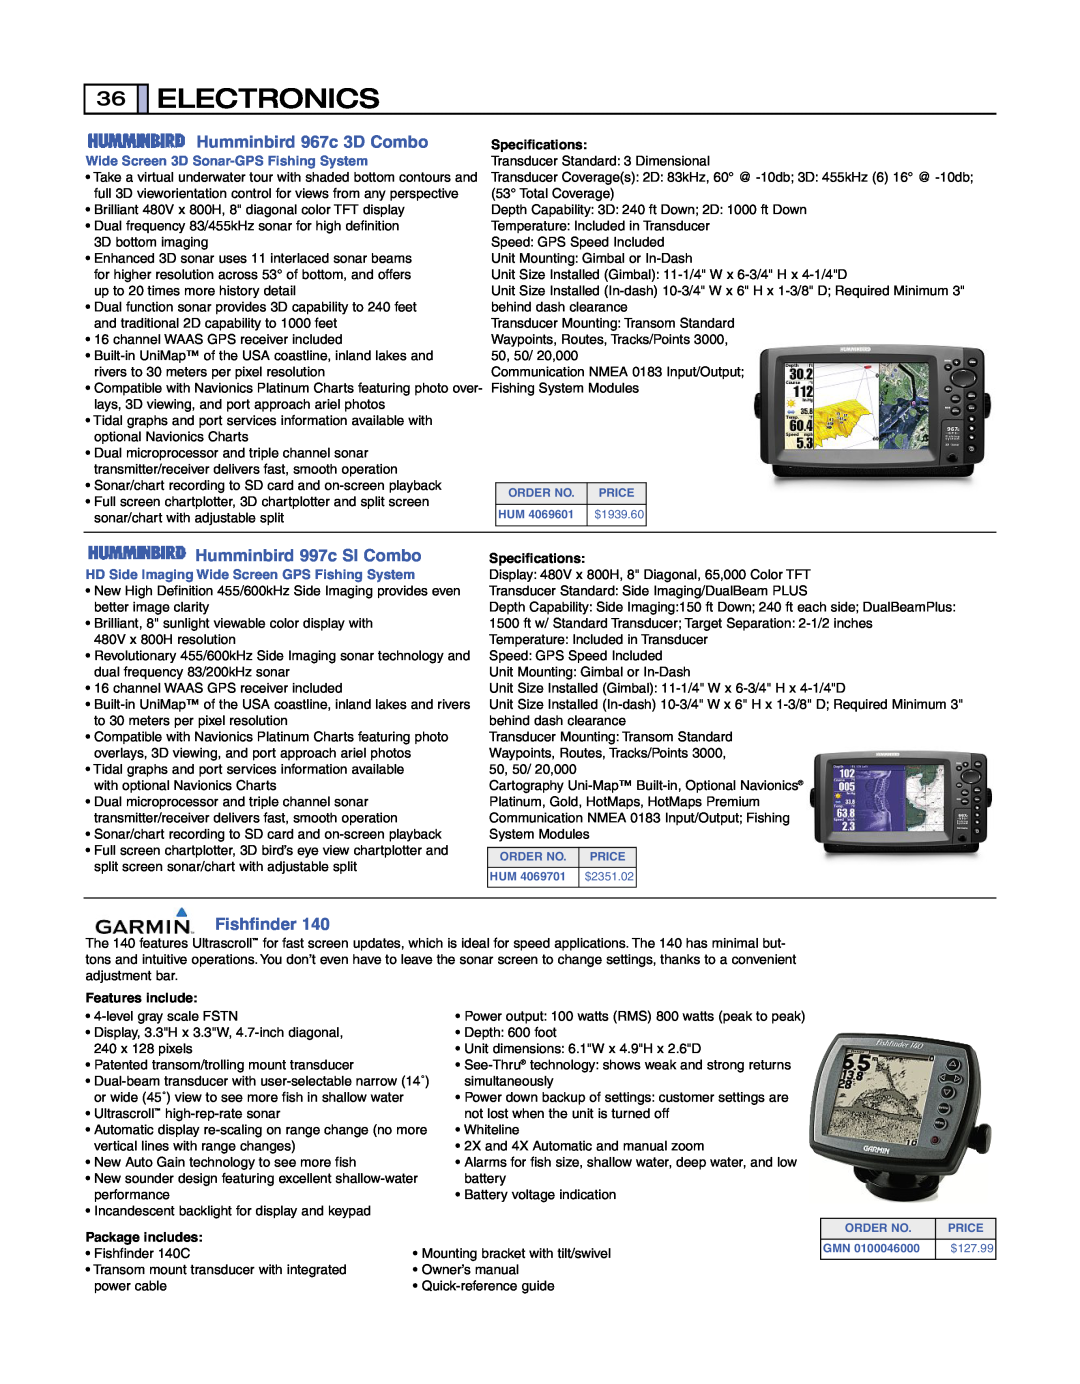 Humminbird specifications Electronics, Humminbird 967c 3D Combo, Humminbird 997c SI Combo, Fishfinder, Specifications 